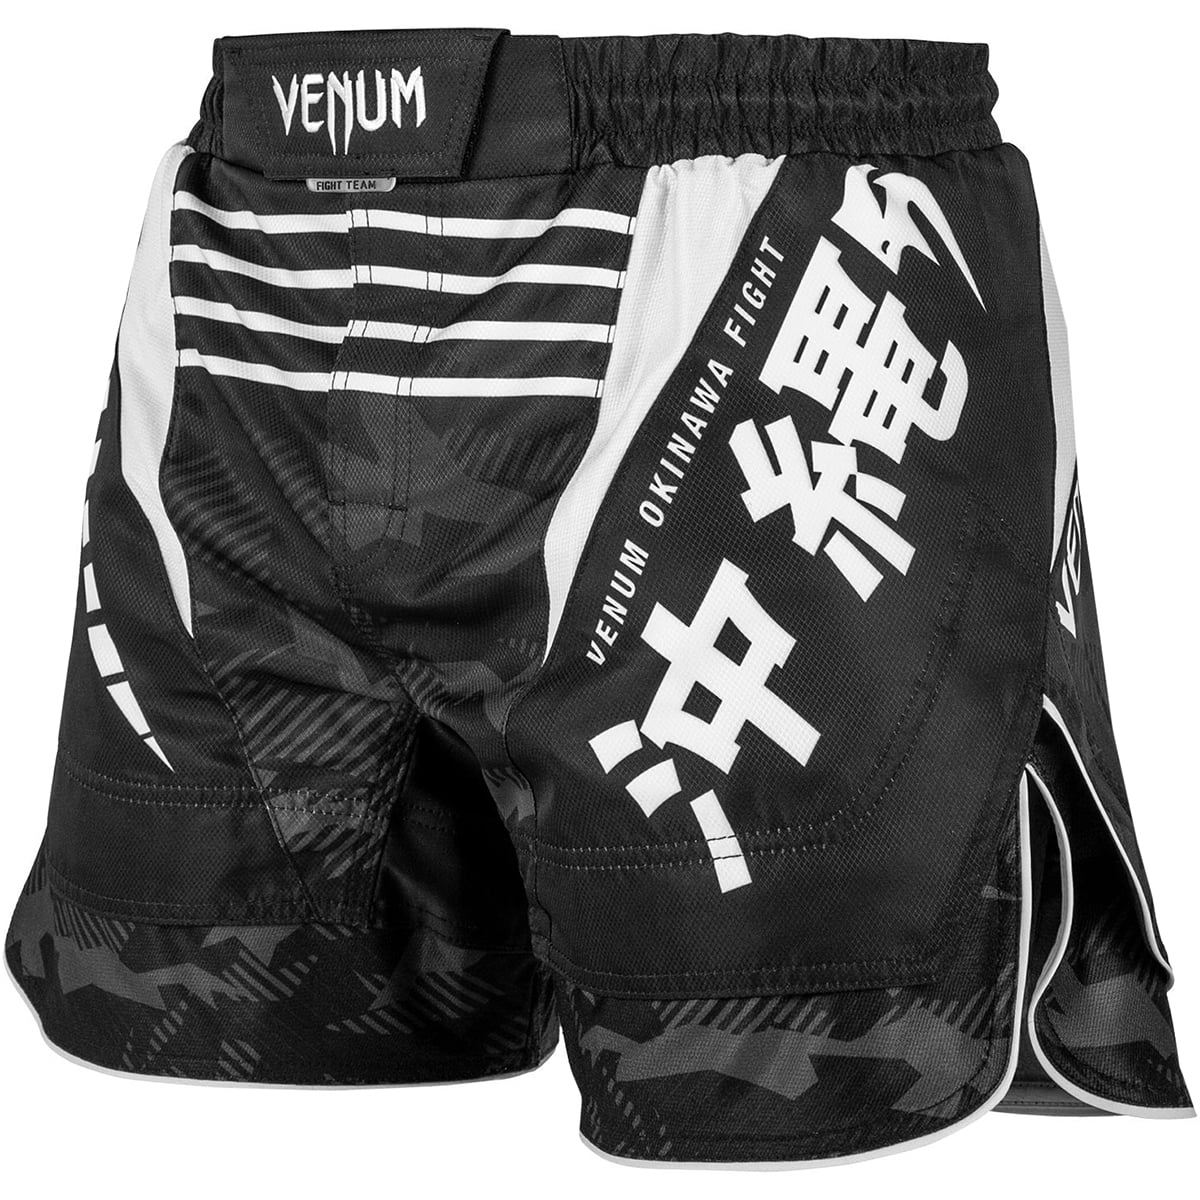 Venum Okinawa 2.0 MMA Fight Shorts - Medium - Black/White